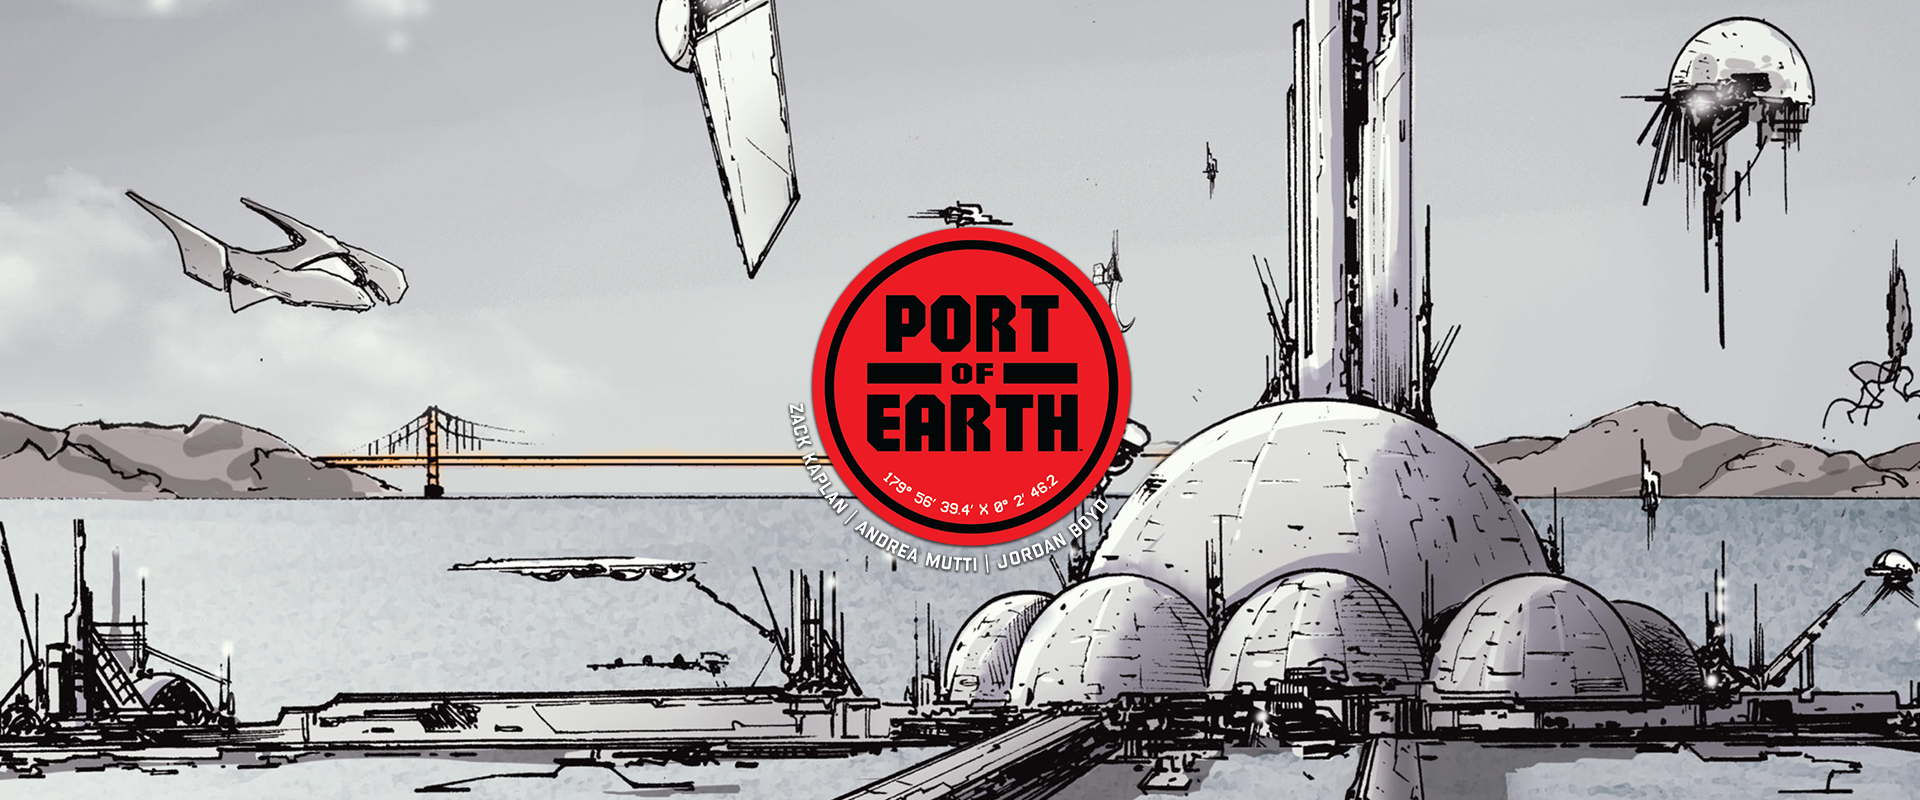 Port-of-Earth-Carousal